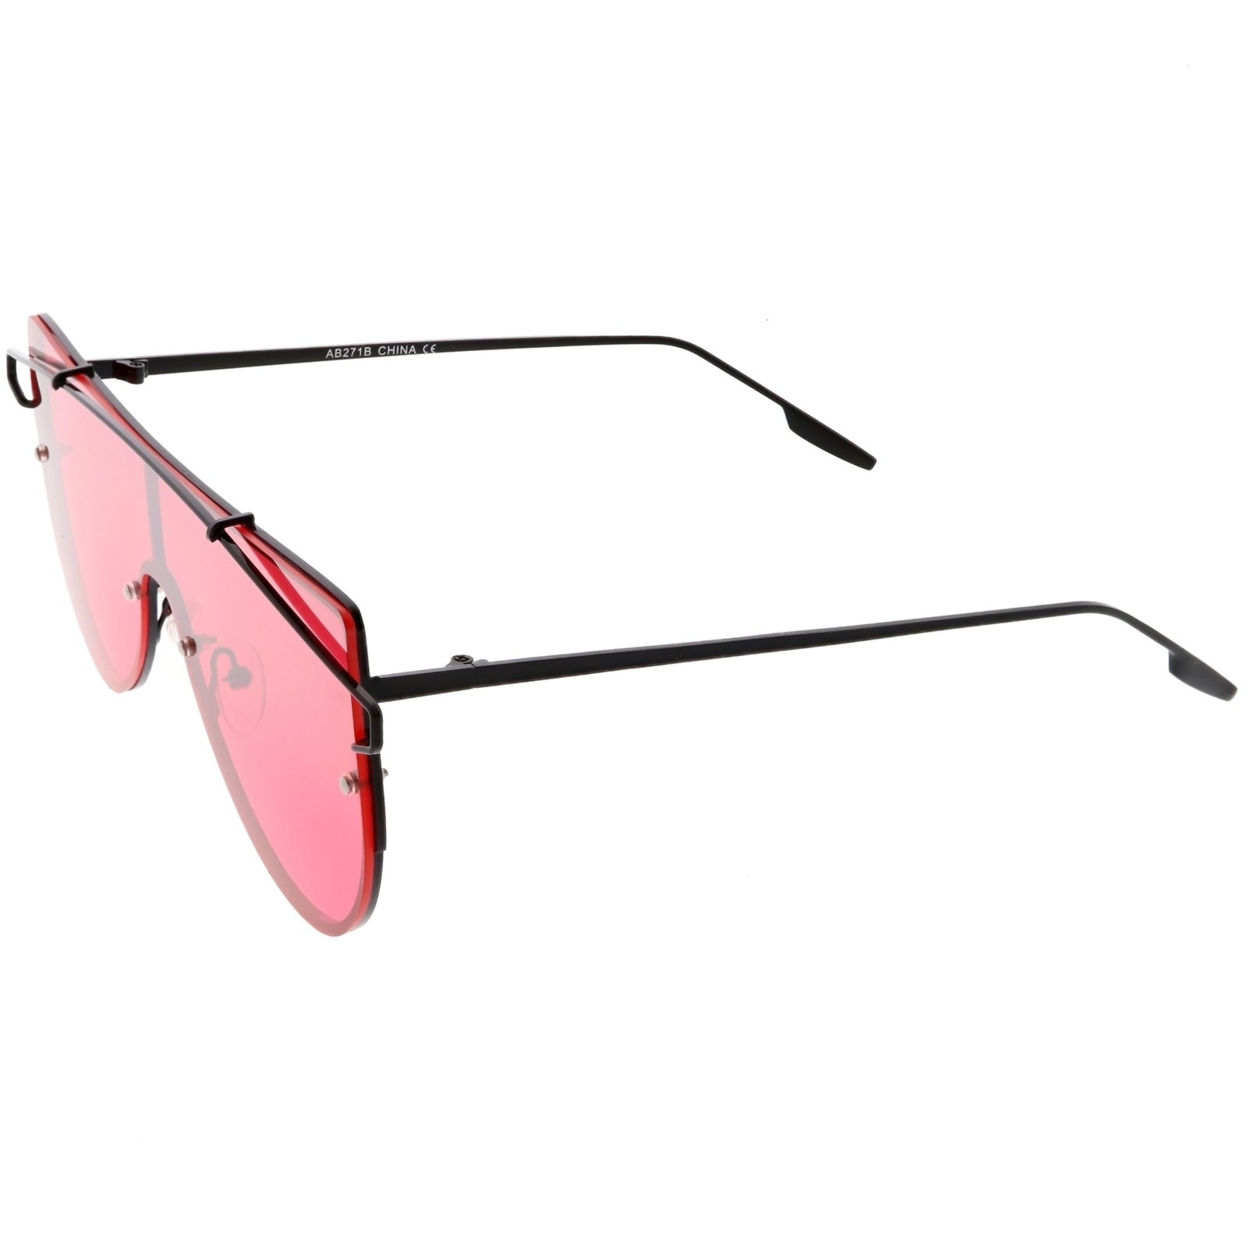 Futuristic Rimless Shield Sunglasses Metal Crossbar Colored Mono Lens 64mm - Gold / Pink